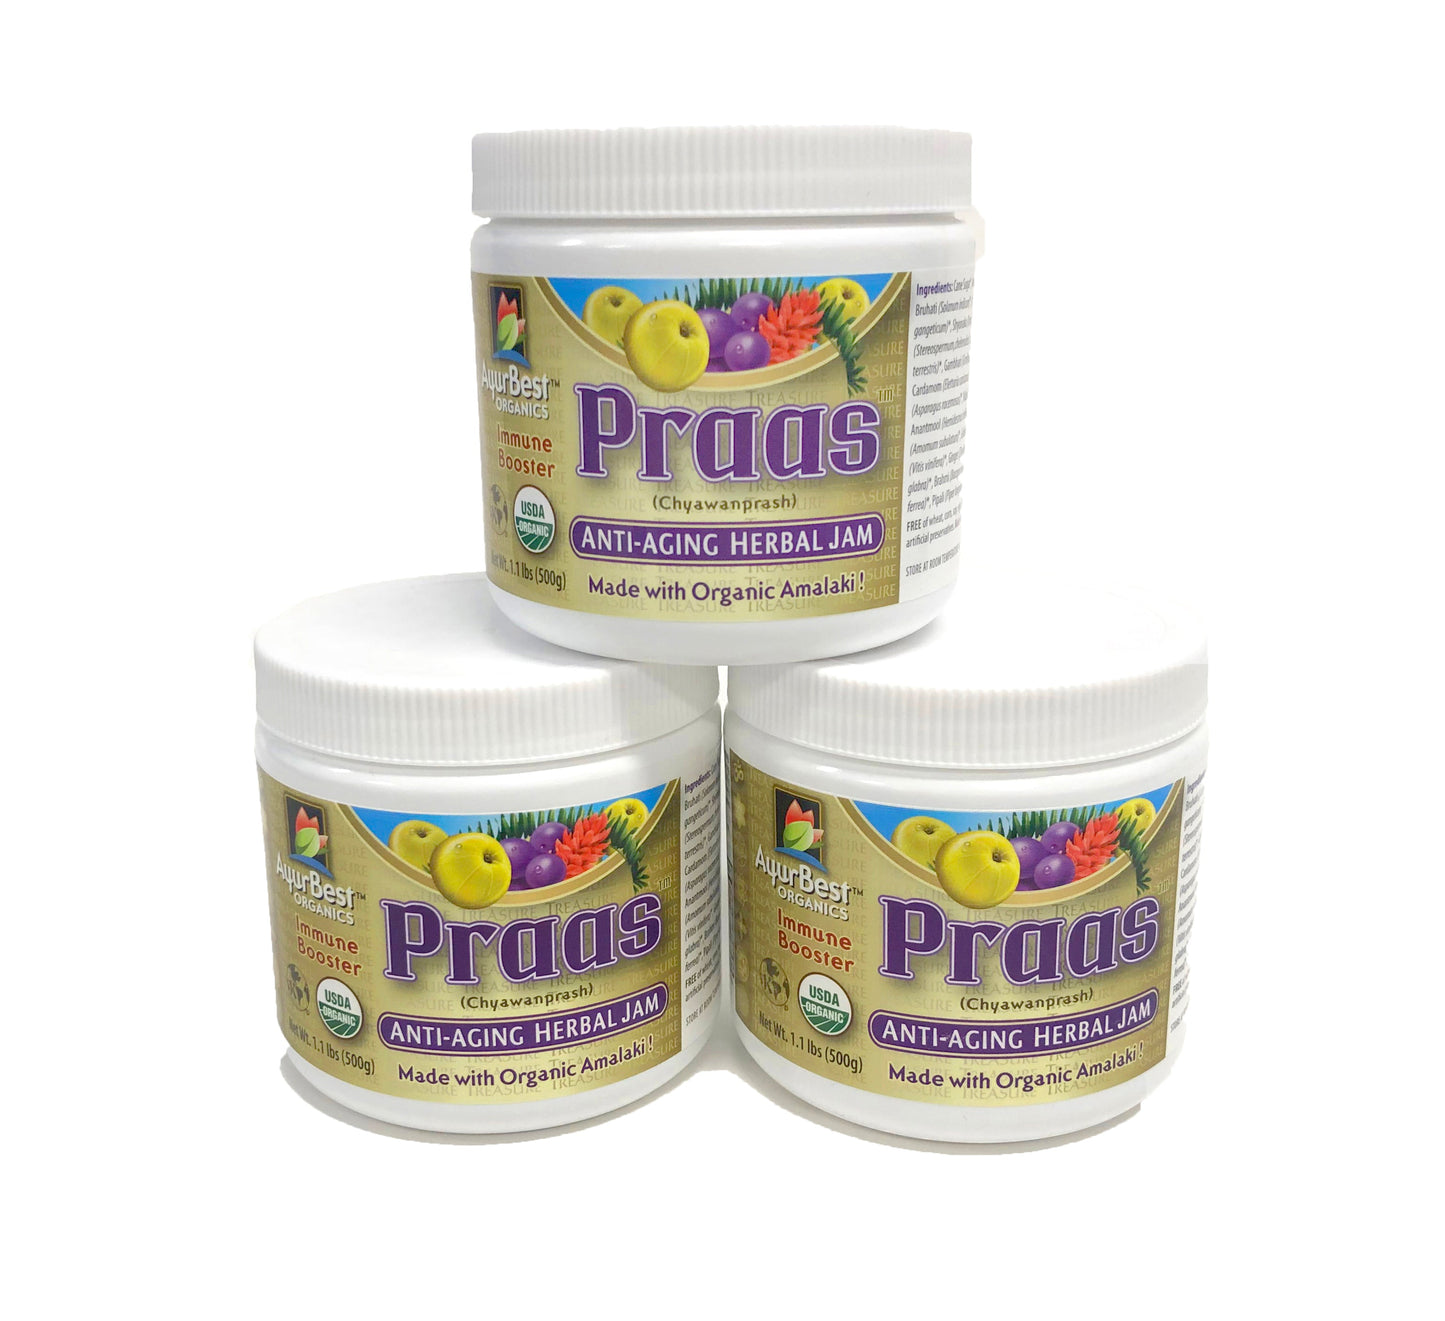 Wholesale PRAAS - Organic Chyawanprash, 100% USDA Certified Organic Herbal Jam - The First Made in the USA, 1.1lb (500g)